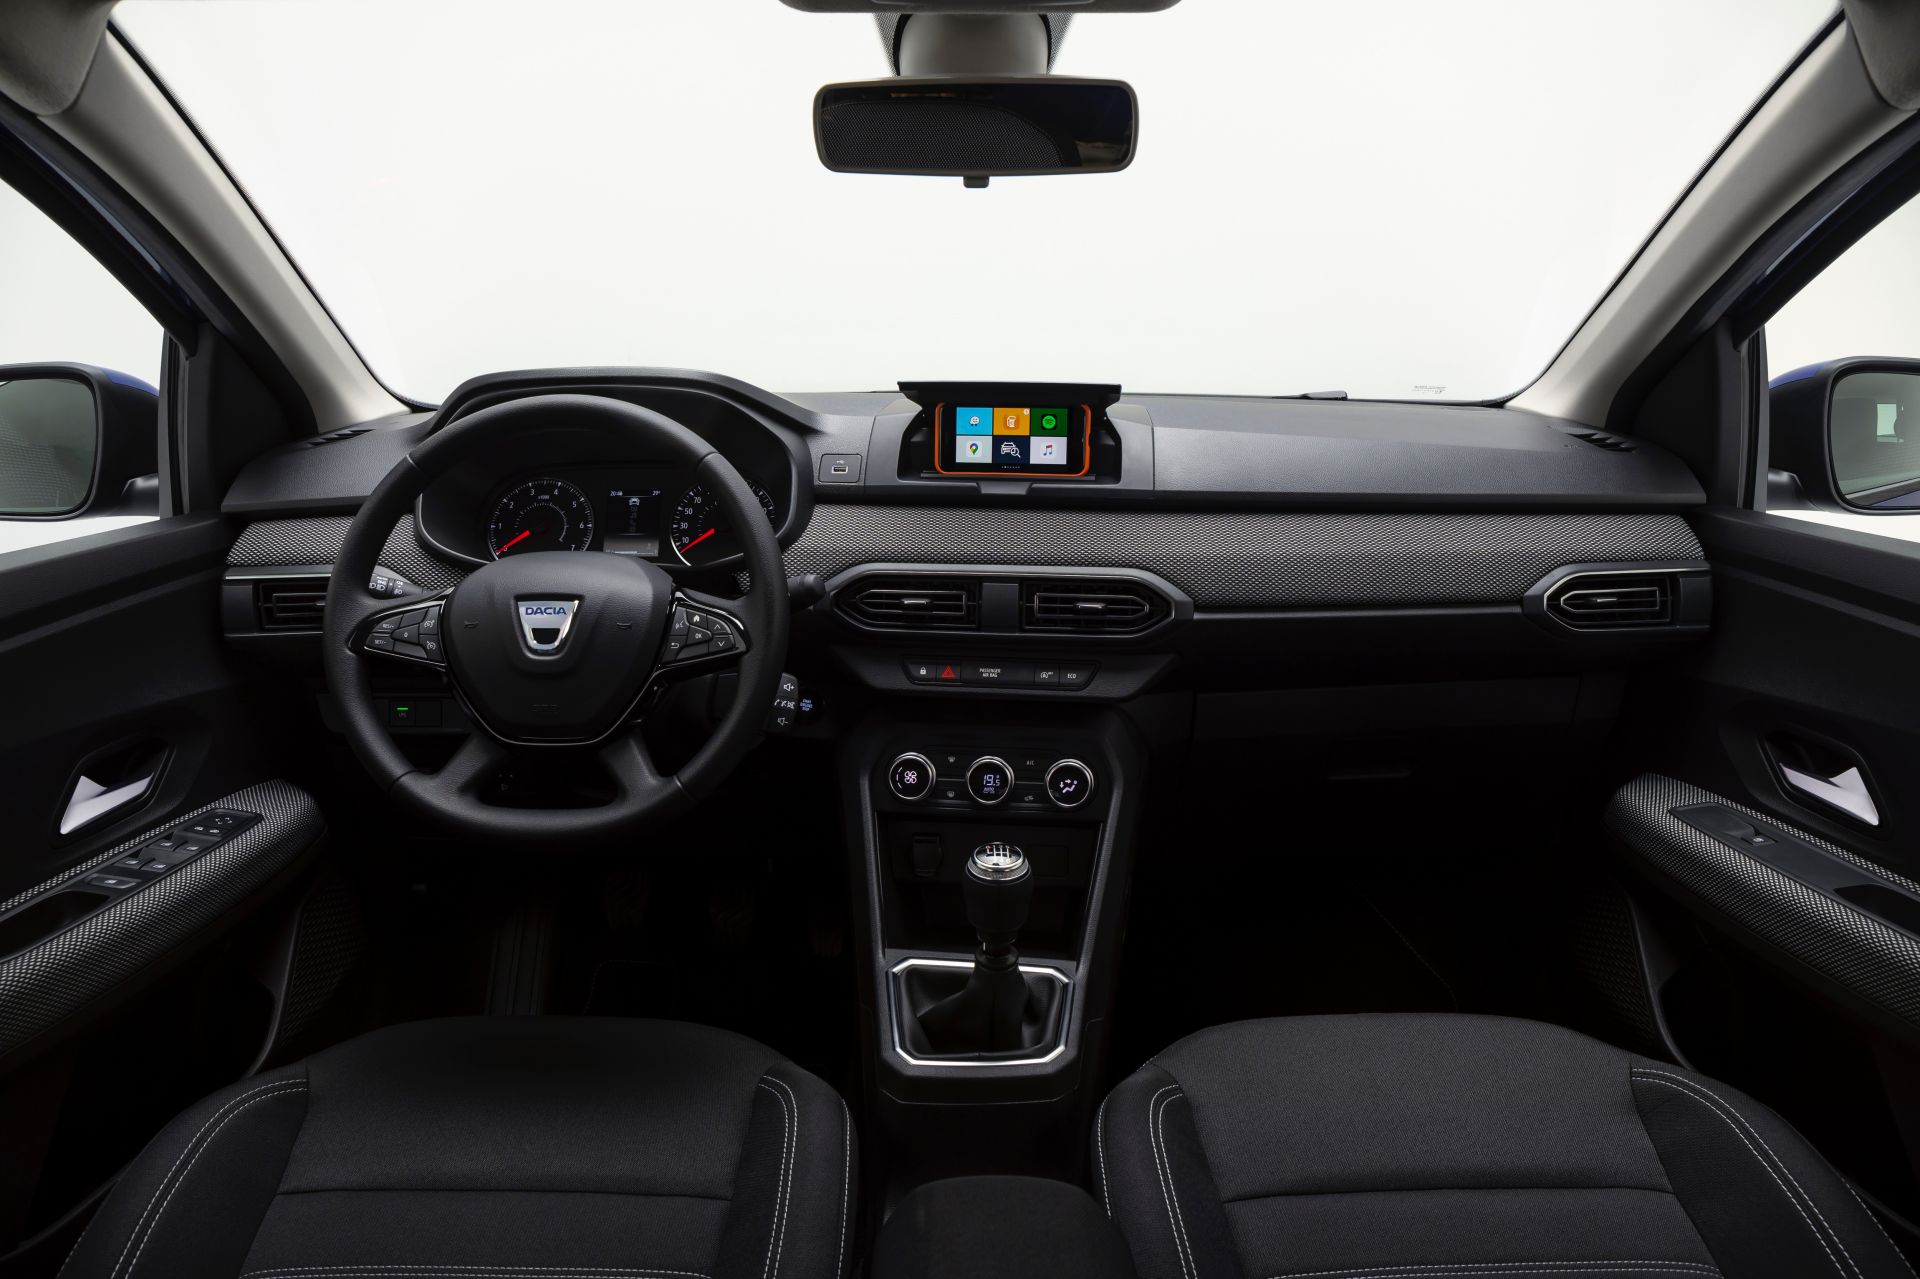 2021 Dacia Sandero, Stepway and Logan – Interior, Exterior and